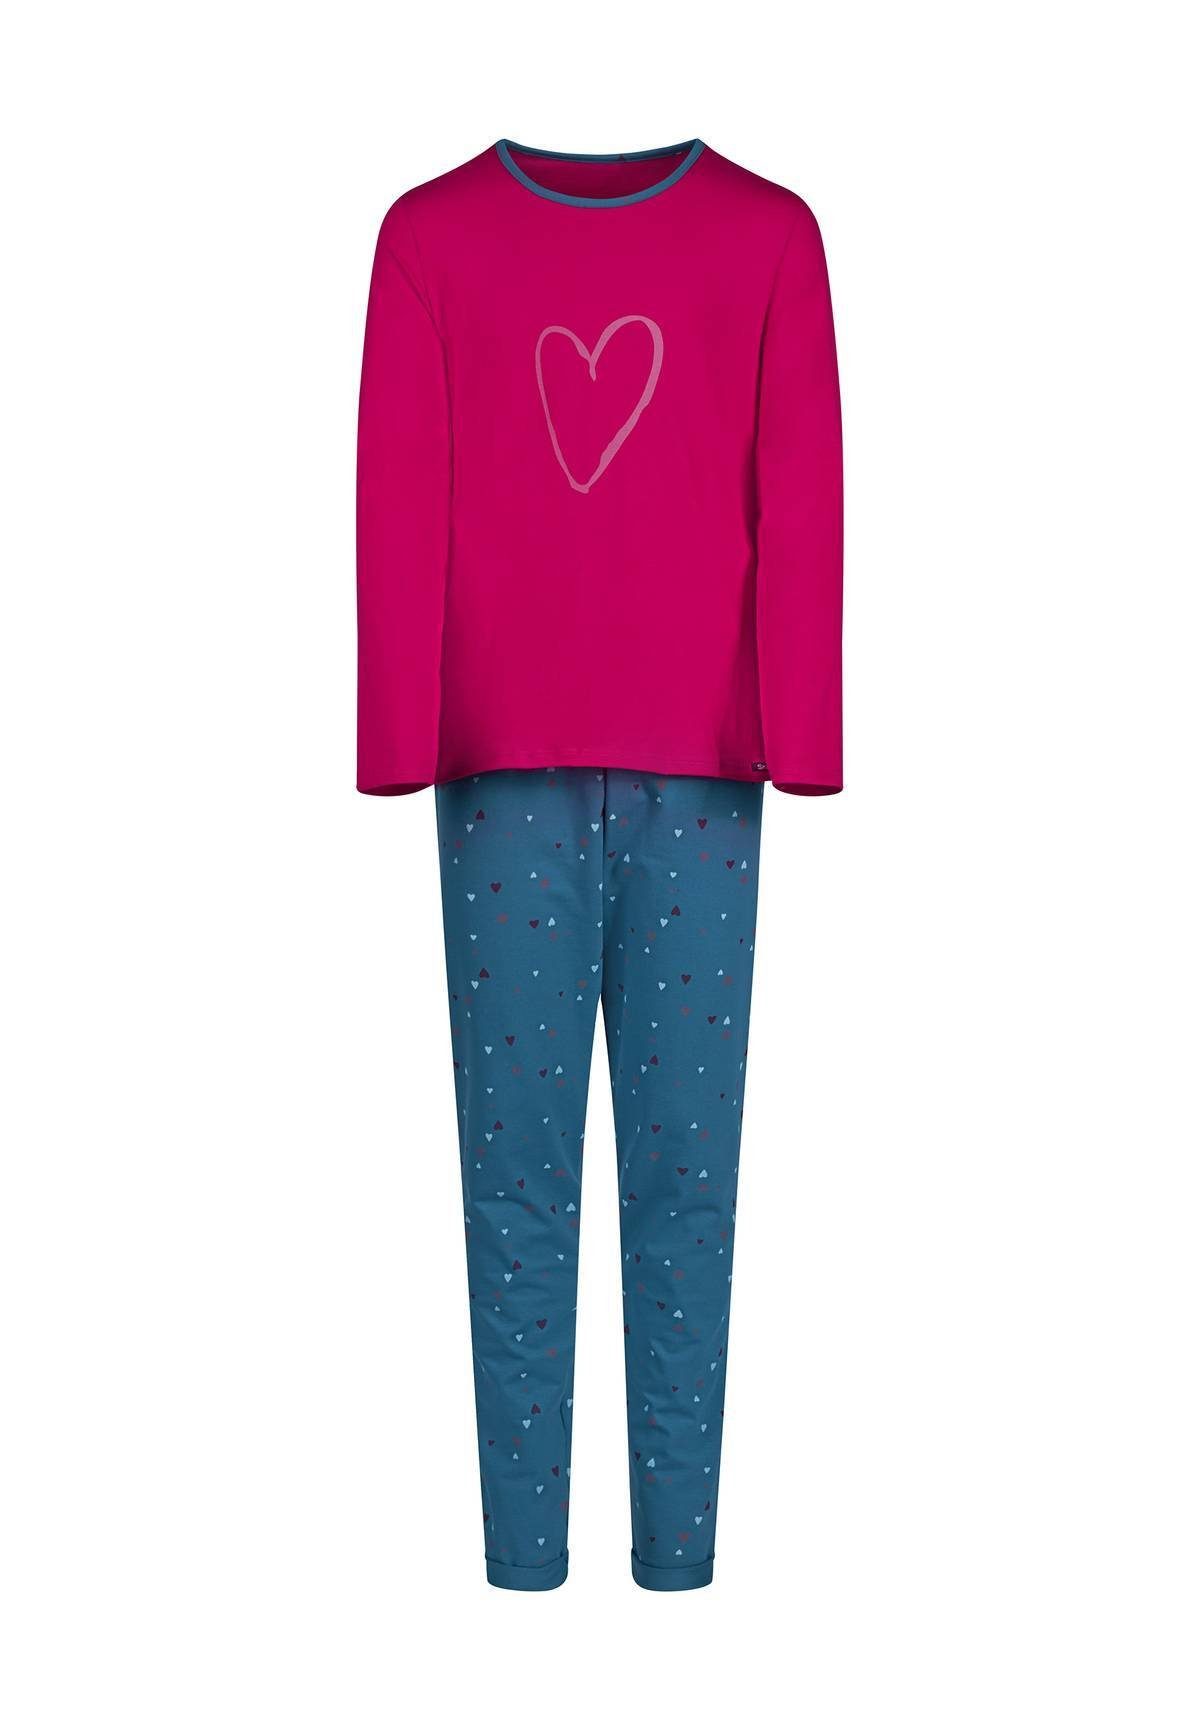 Set Skiny 2-tlg. Schlafanzug Pyjama Mädchen - lang, Kinder, Pink/Blau